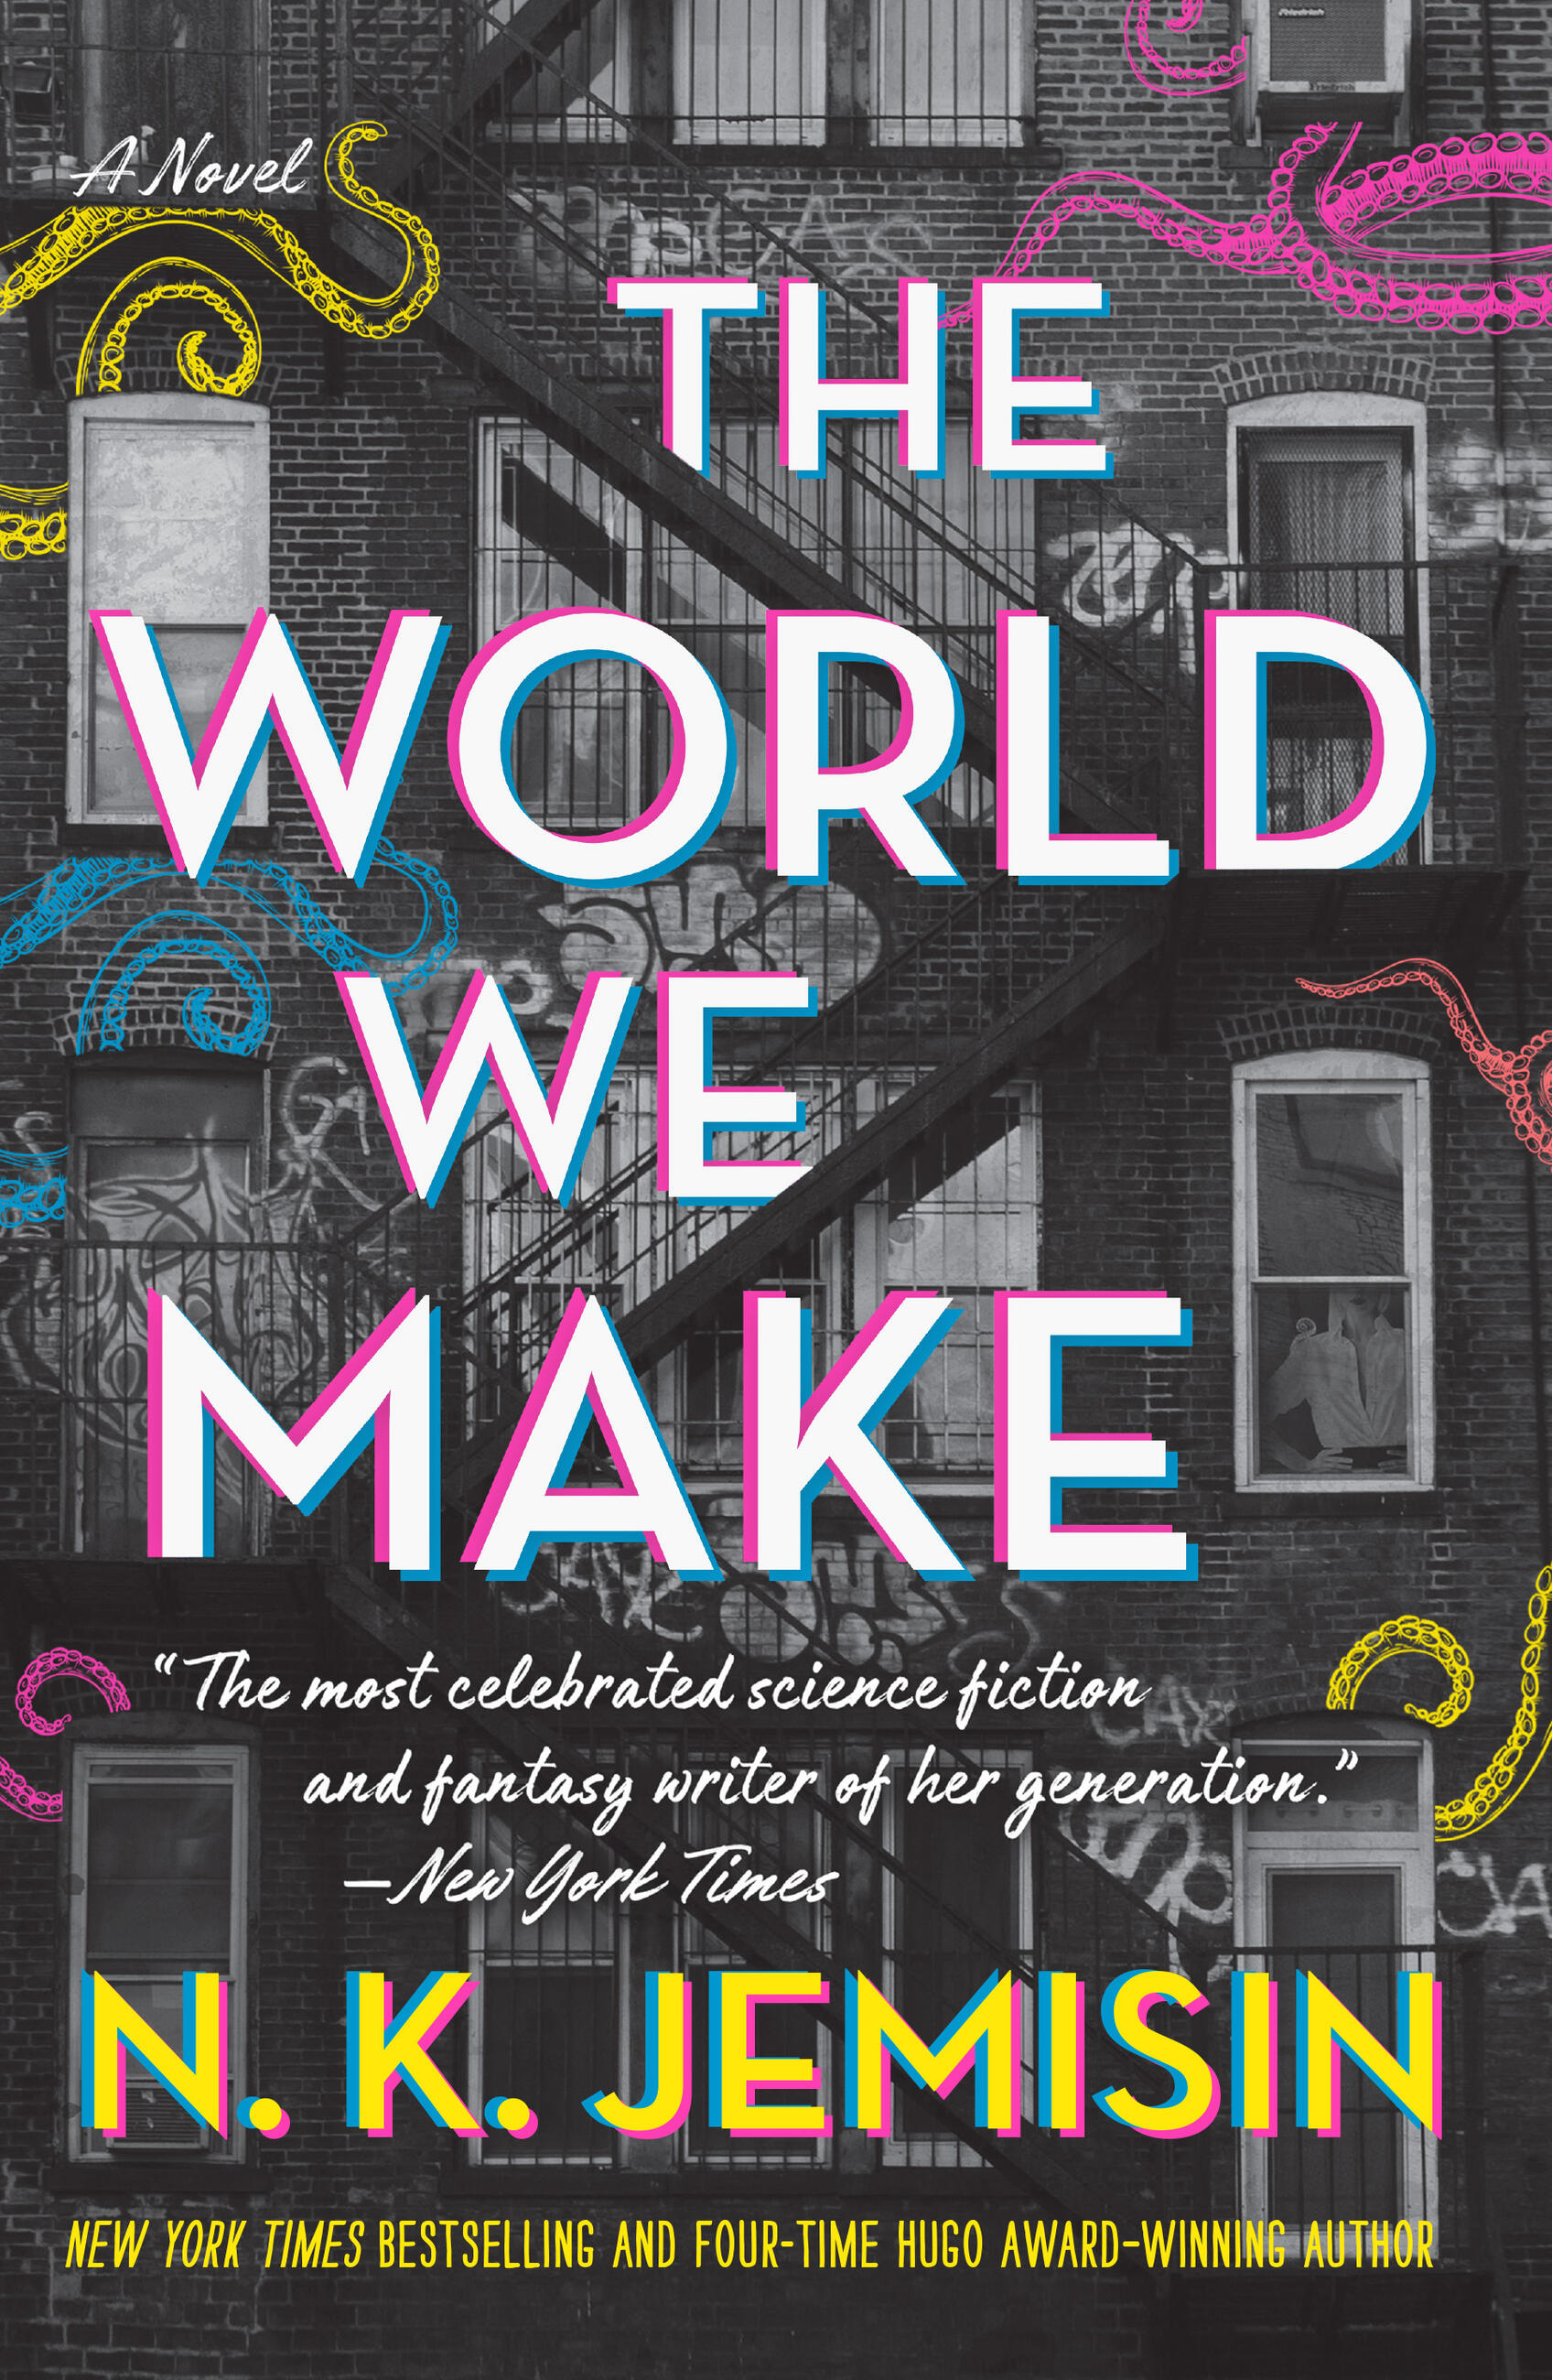 Group　K.　World　The　by　Hachette　Make　We　Jemisin　N.　Book